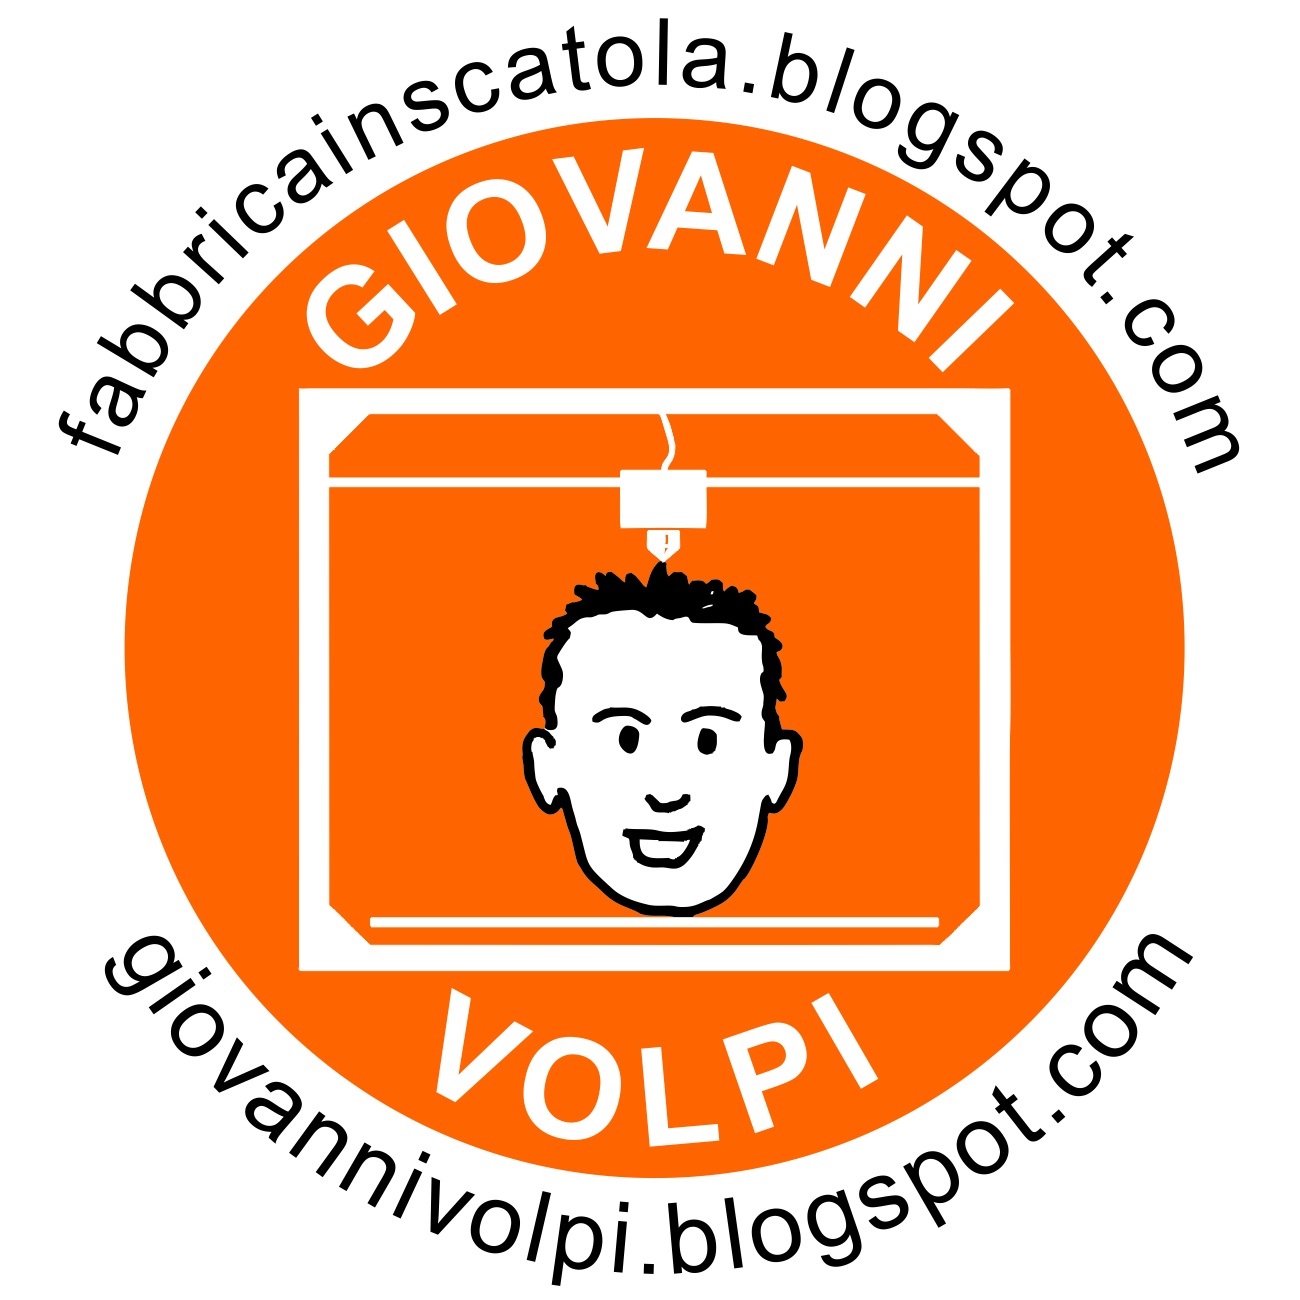 Giovanni Volpi